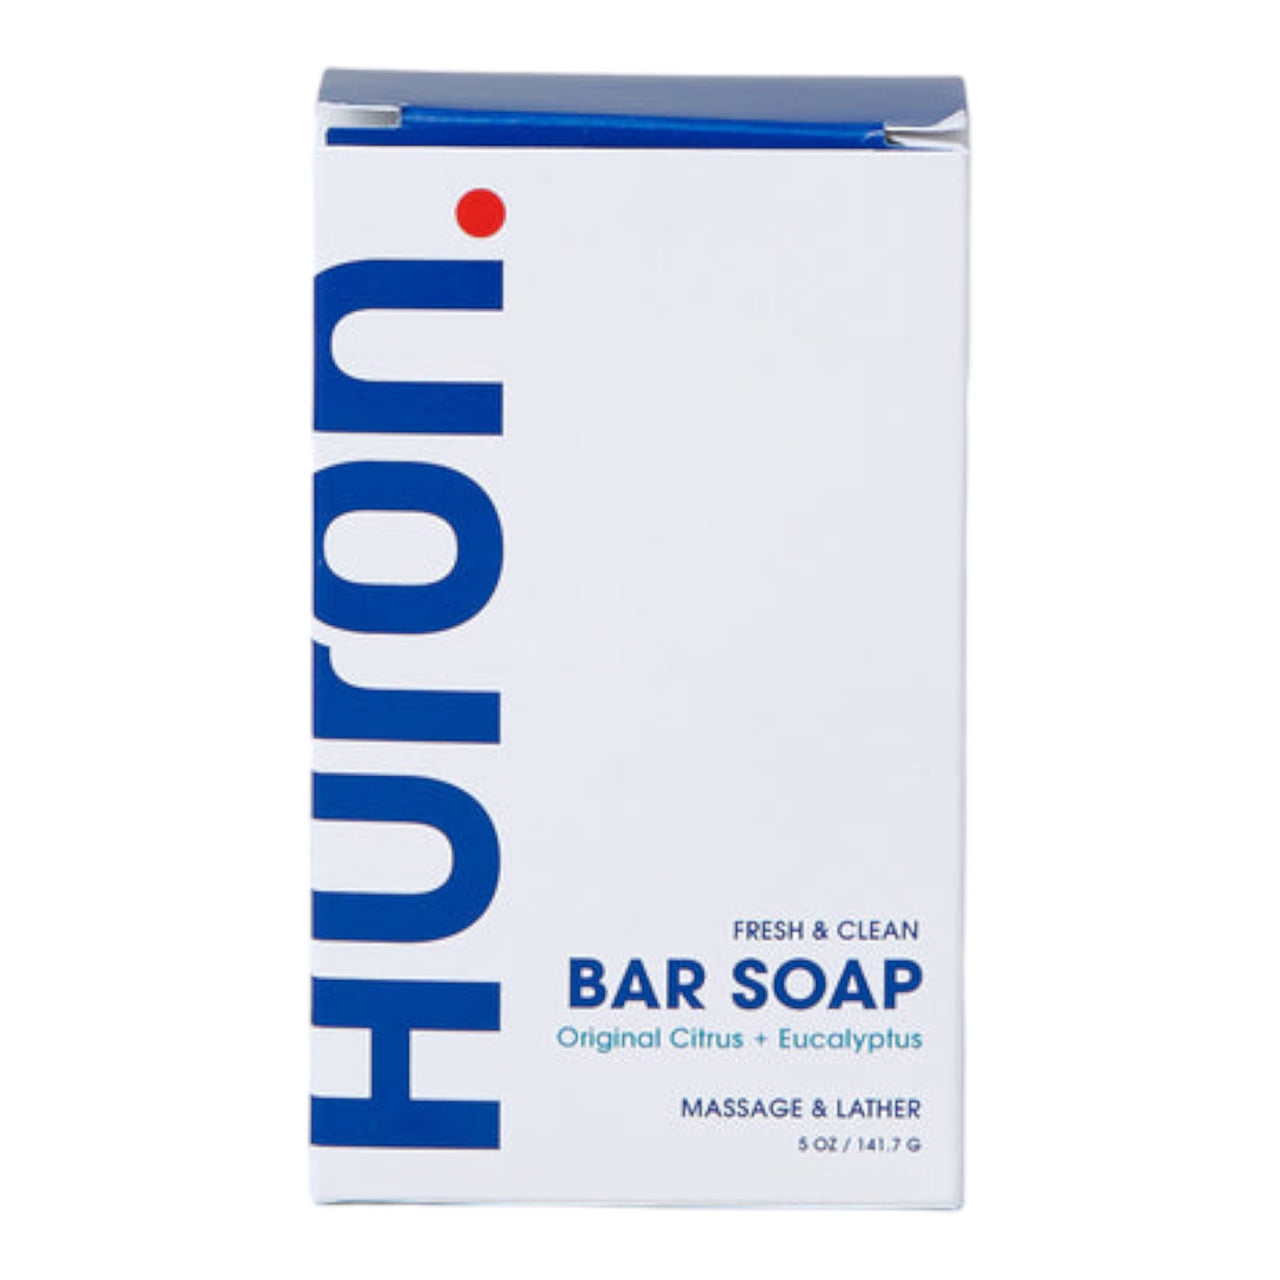 Bar Soap | Citrus + Eucalyptus